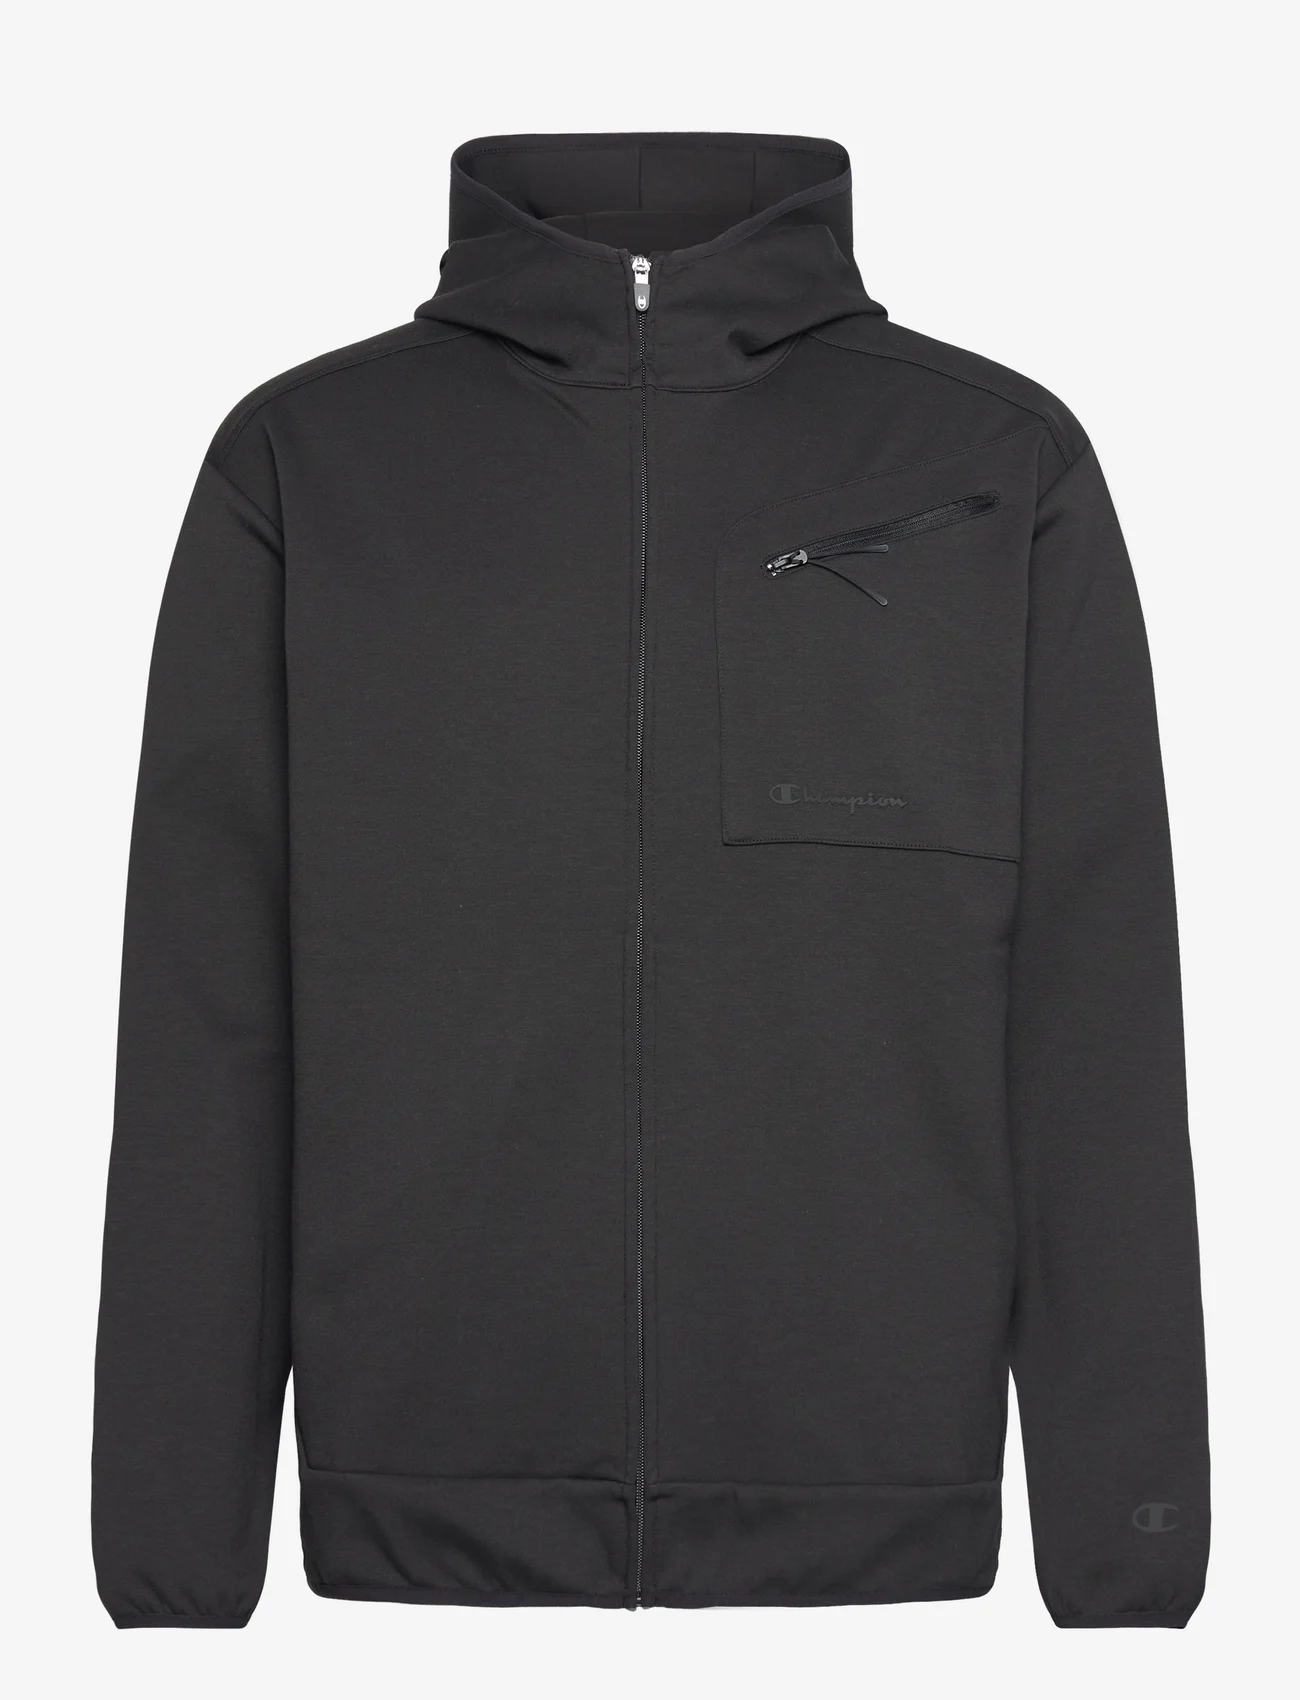 Champion - Hooded Full Zip Sweatshirt - hettegensere - black beauty - 0